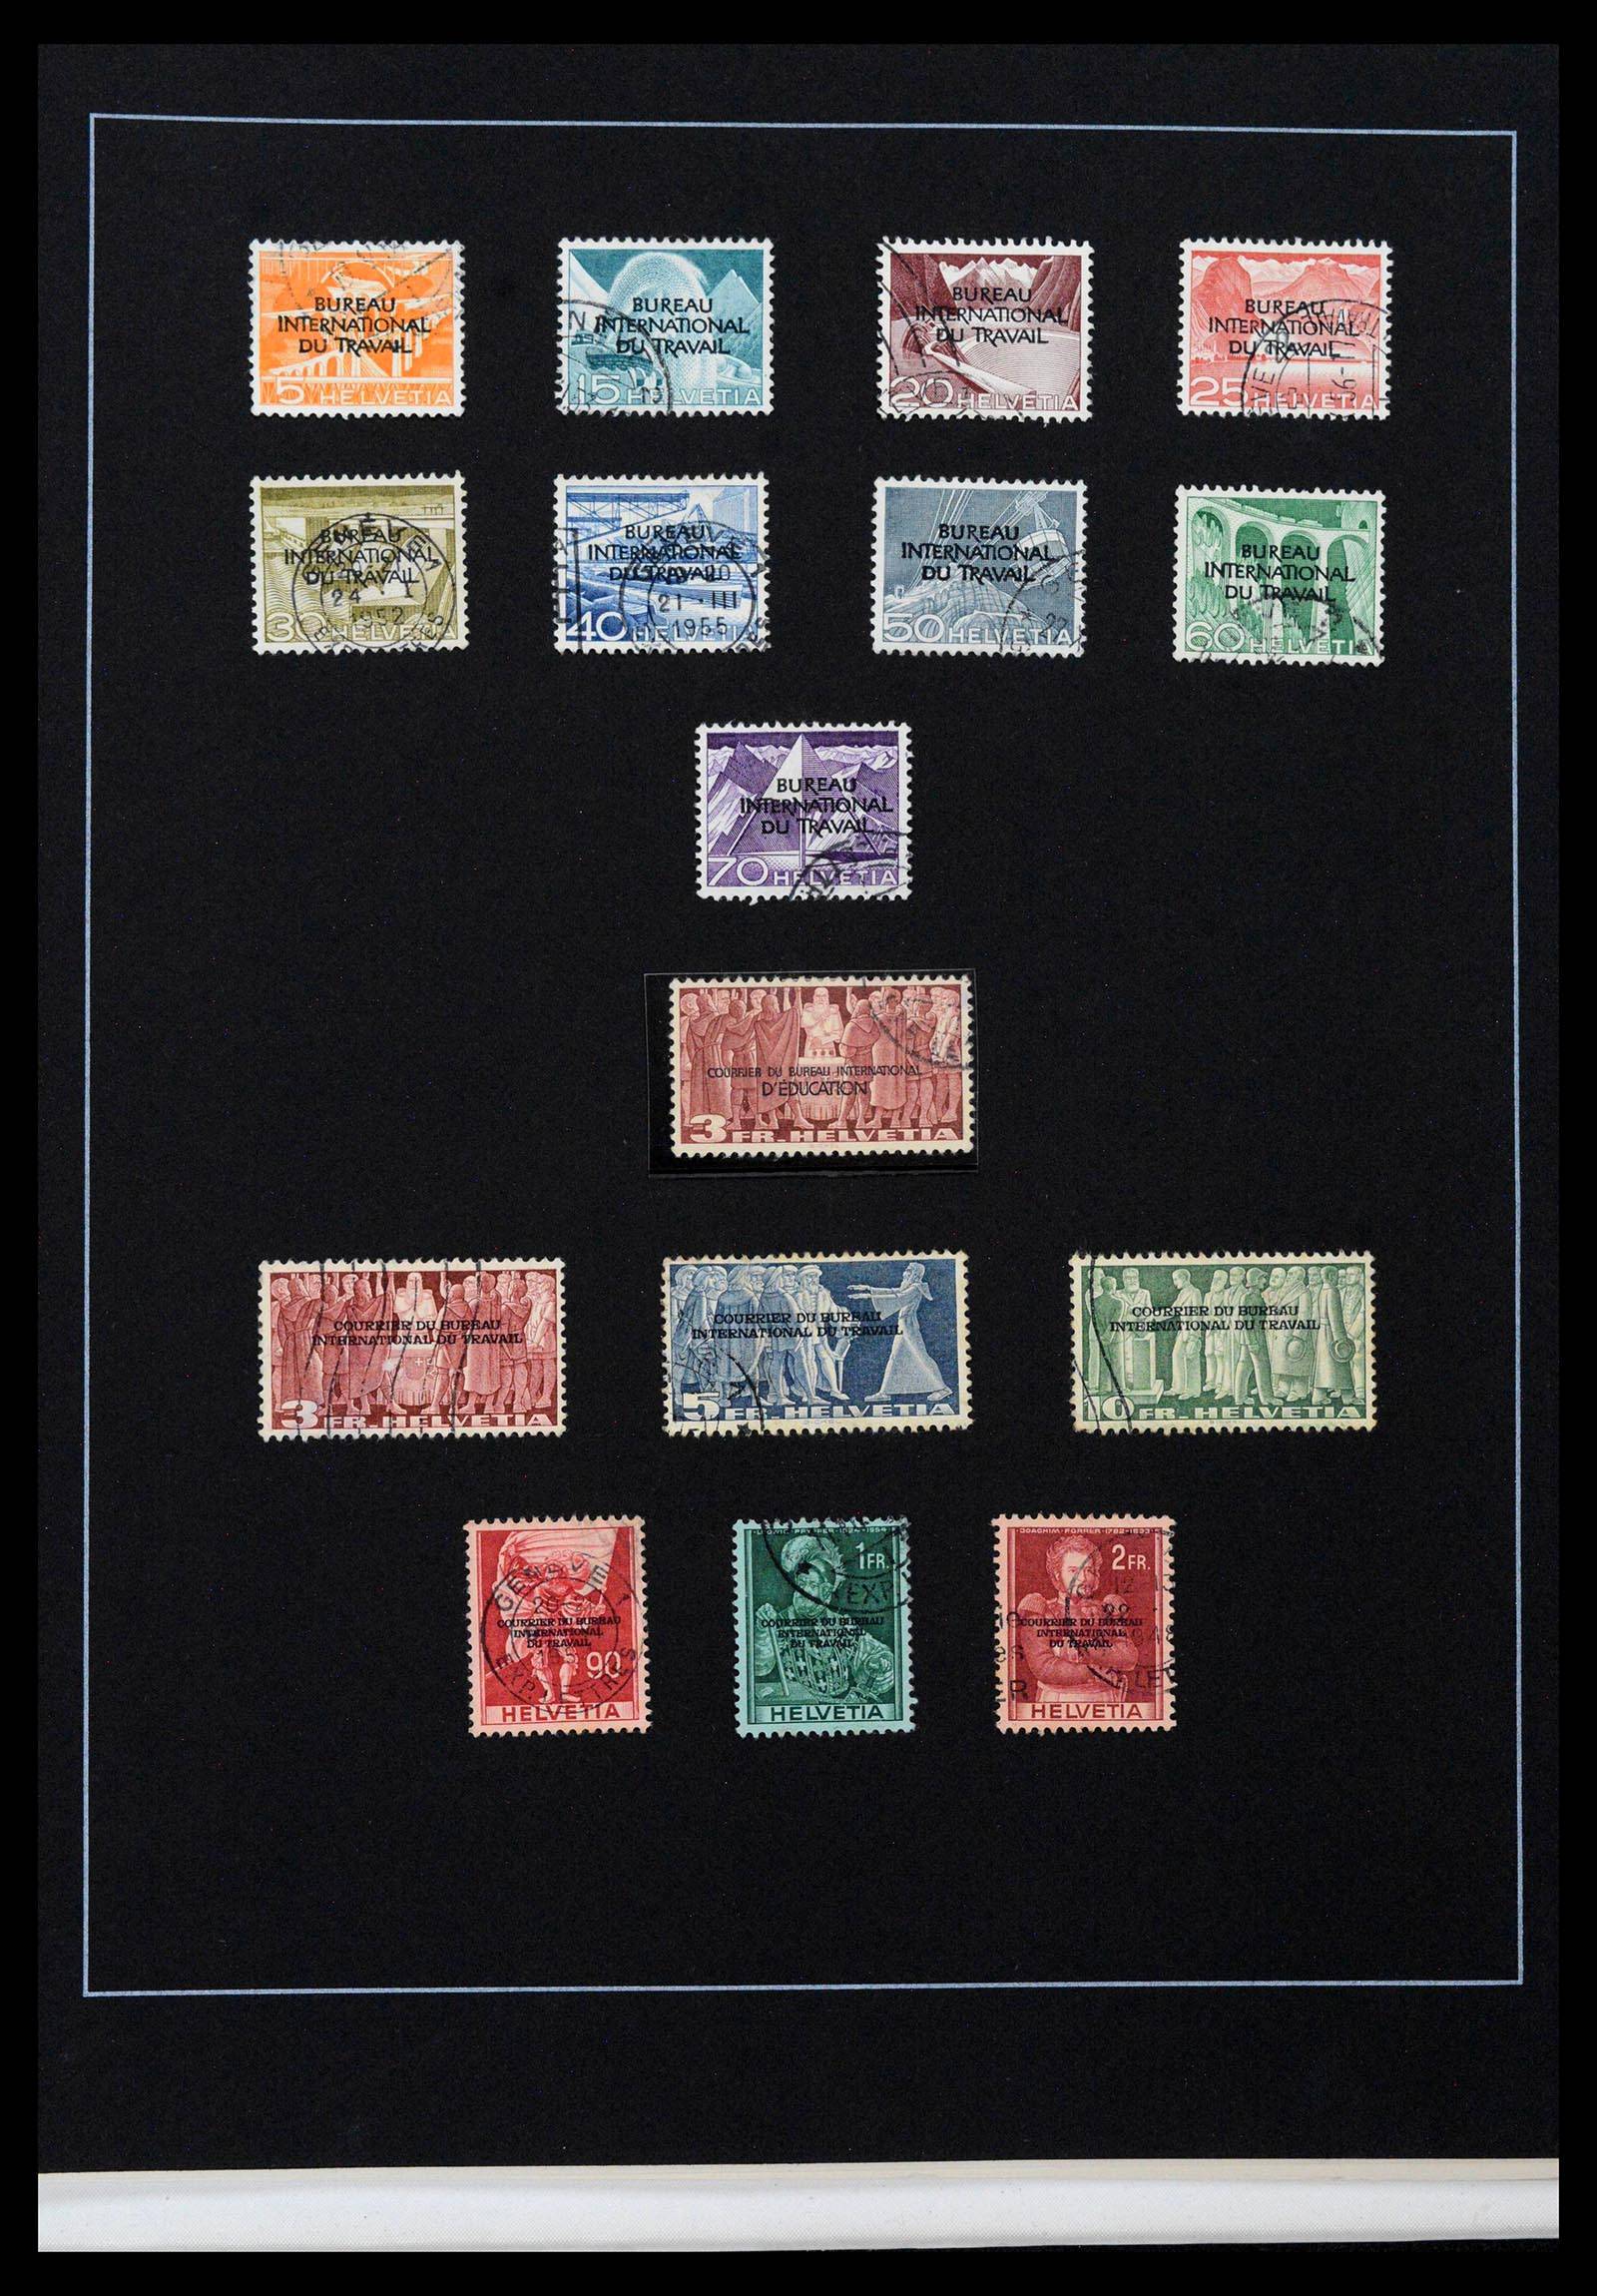 39235 0082 - Stamp collection 39235 Switzerland 1843-1960.